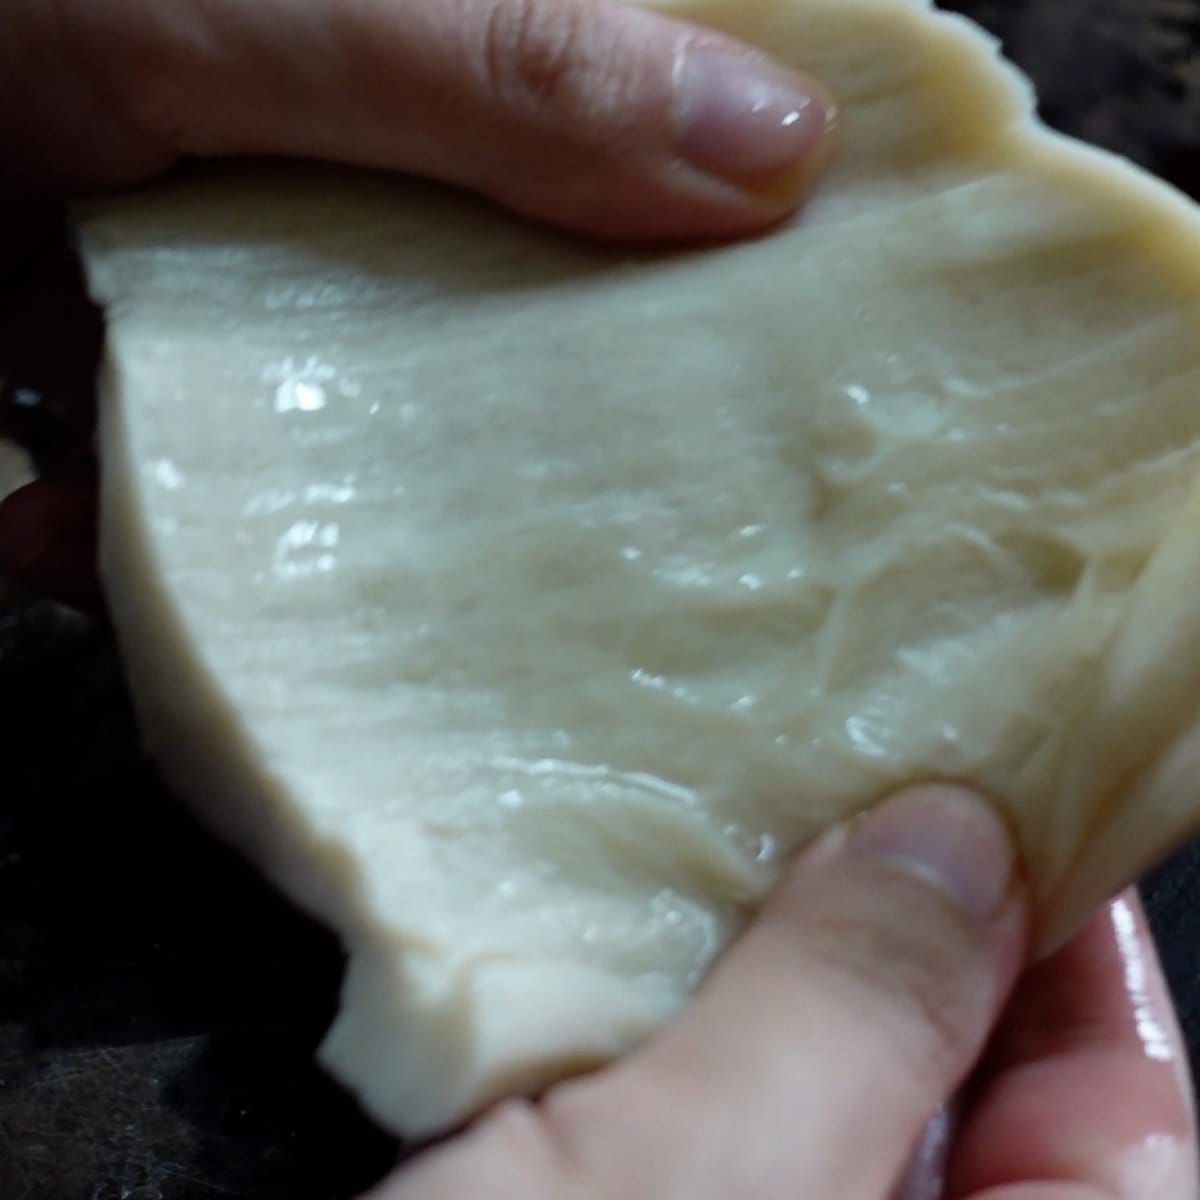 Form a mushroom cutlet